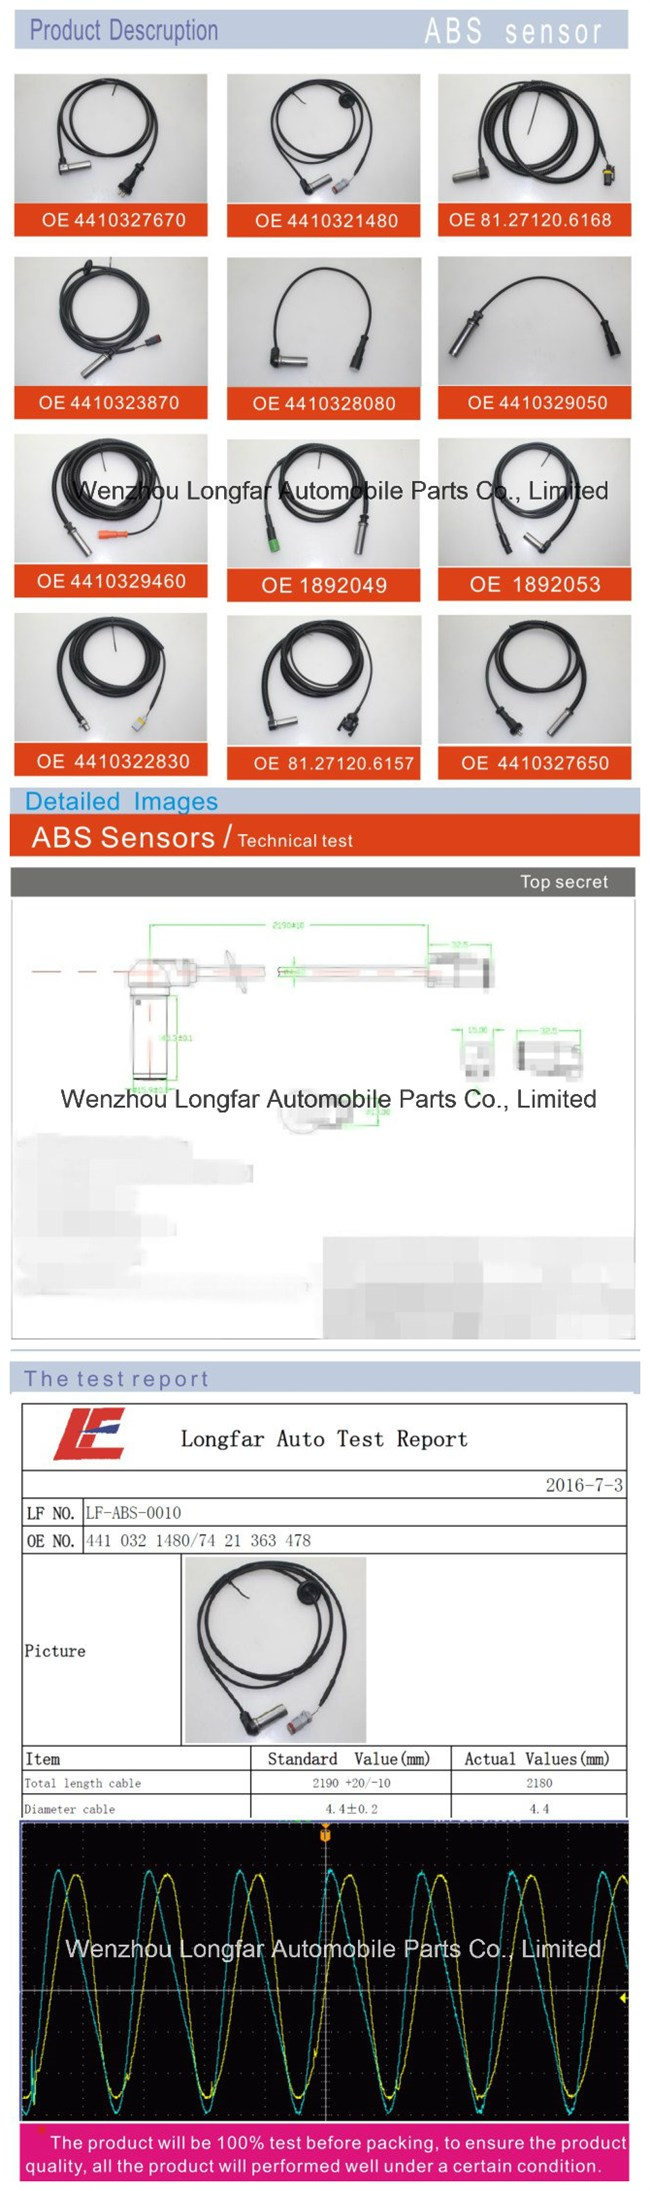 Auto Truck ABS Sensor Anti-Lock Braking System Transducer Indicator Sensor 4410323820, 441 032 3820, A0065427618 for Mecedes-Benz, Daf, Wabco